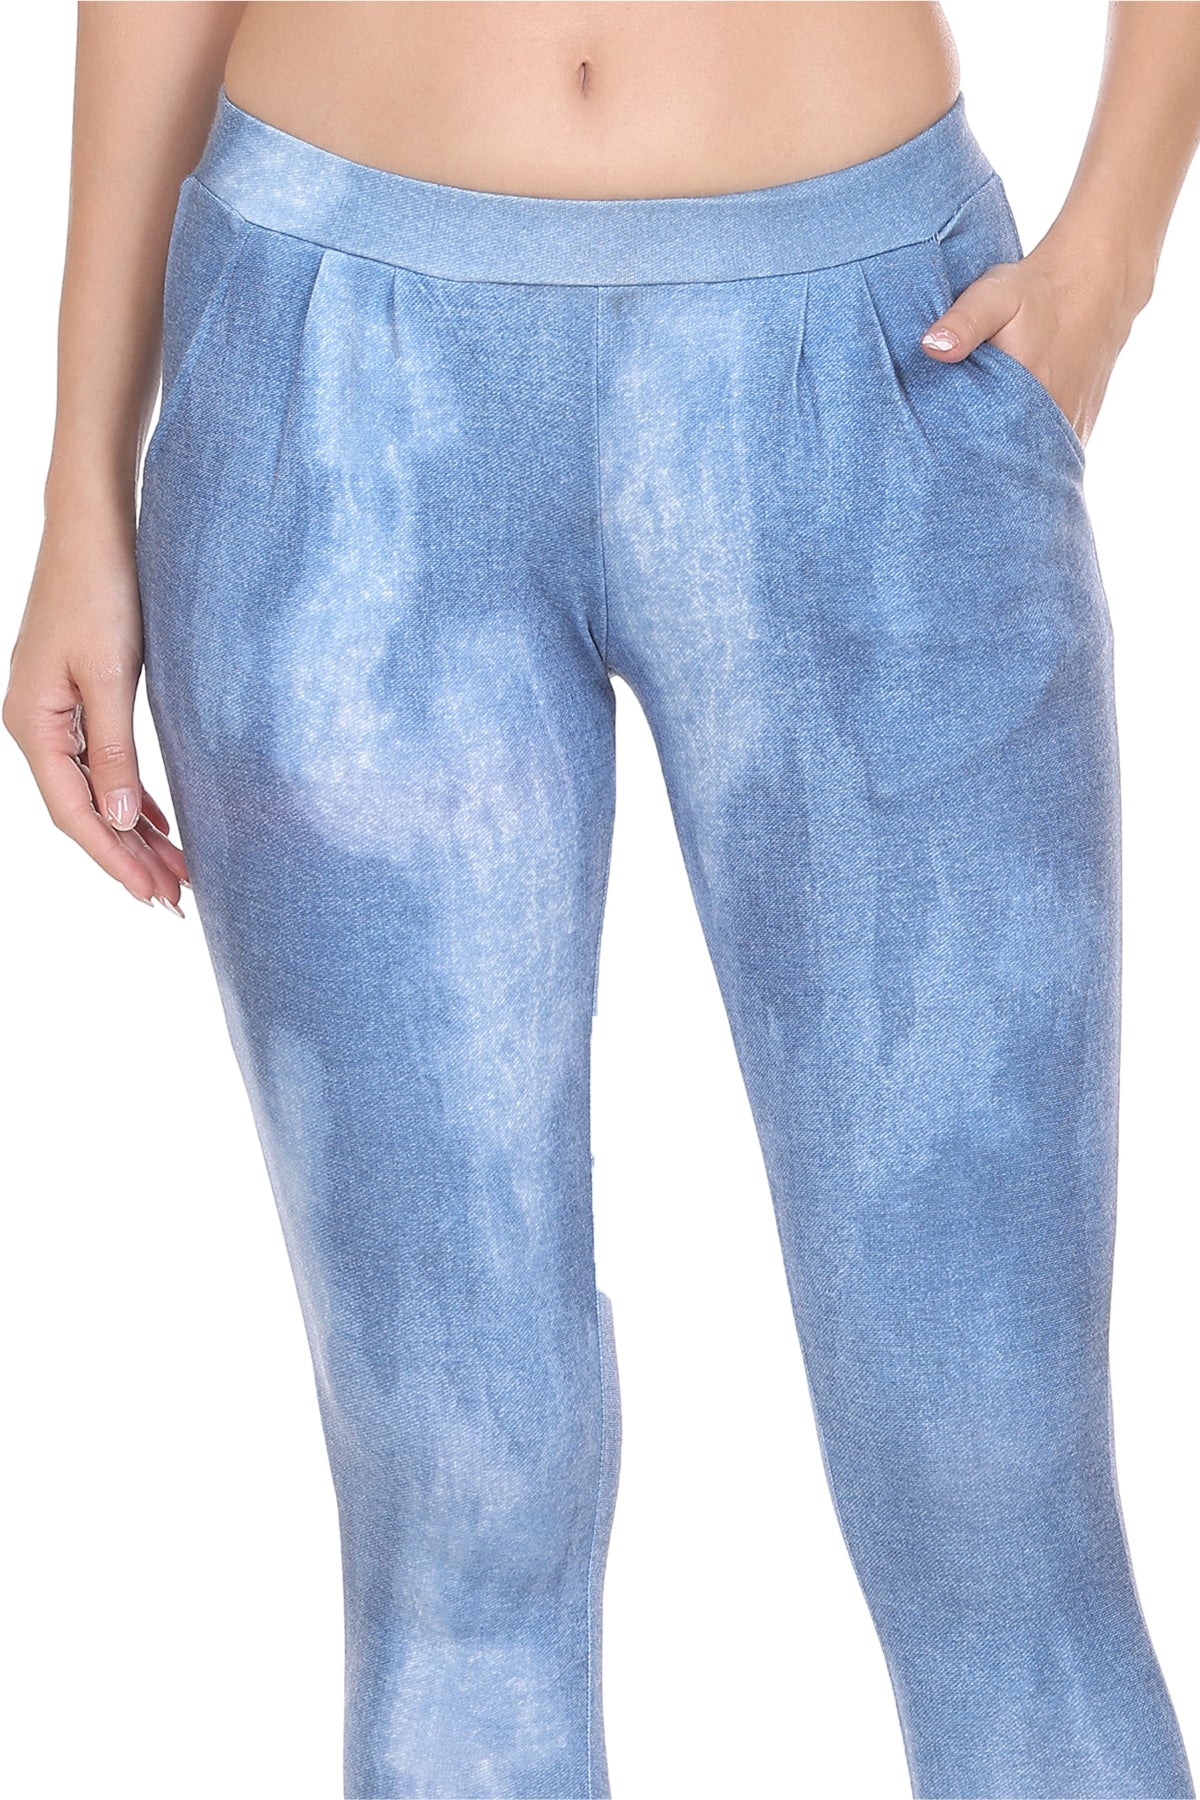 Women Skinny Leggings Denim Look Jeans Jeggings Stretchy High Waist push up  Pant | eBay